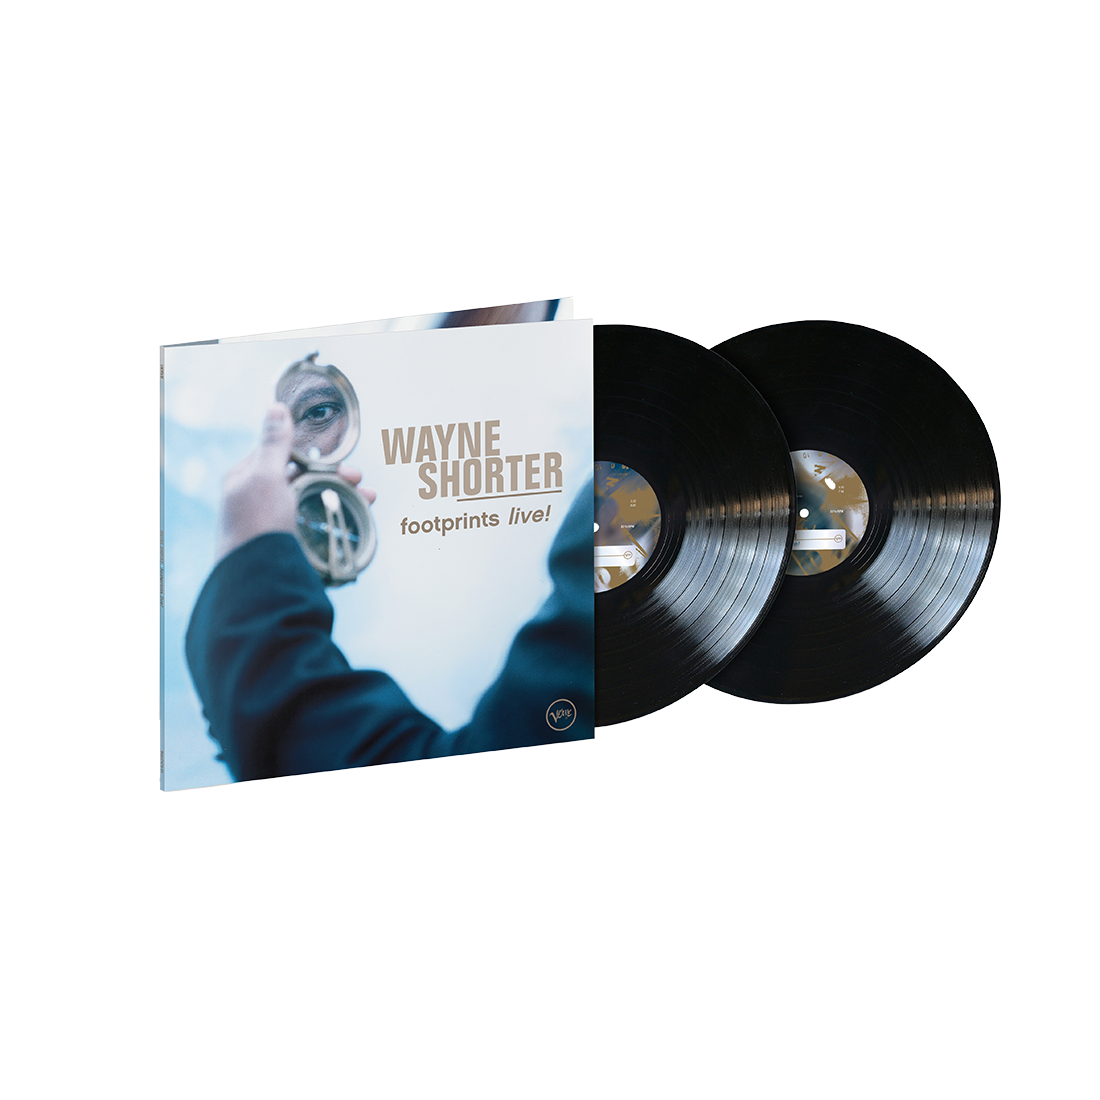 Wayne Shorter - Footprints Live!: Vinyl LP